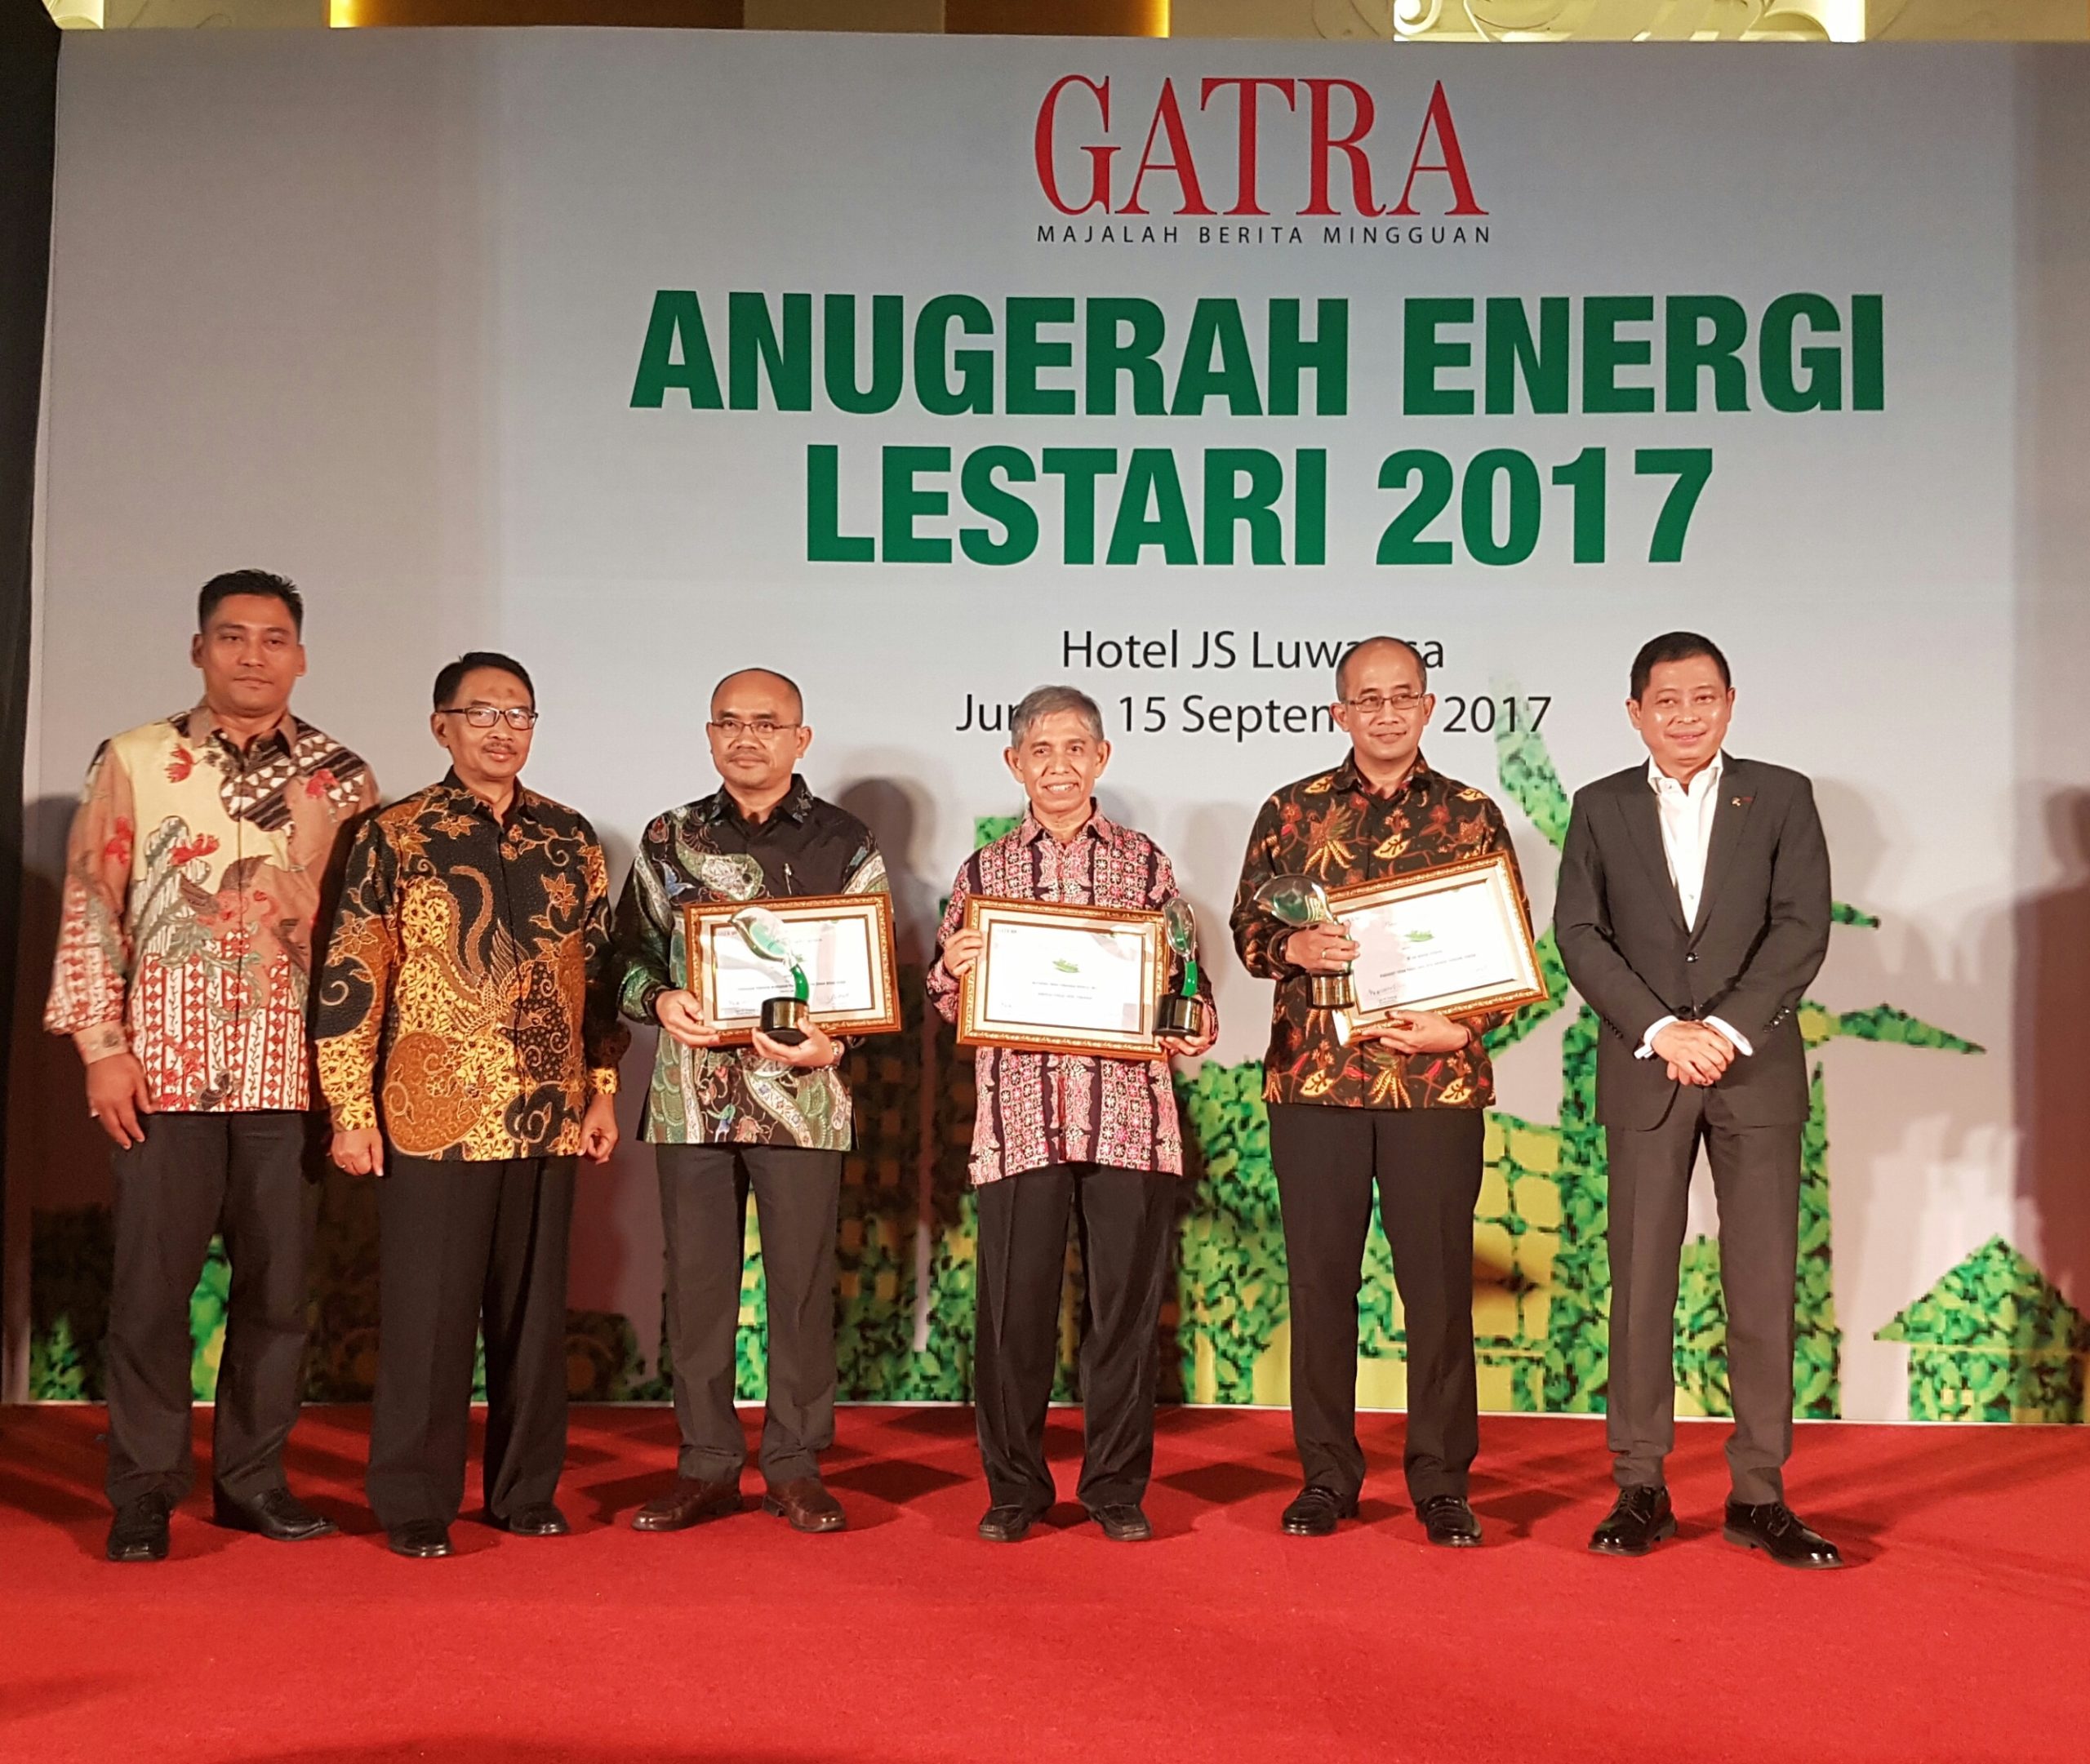 [Jurnal Sumbar] Berhasil Kembangkan PLTBg, Asian Agri dan Pemprov Sumatera Barat Raih Anugerah Energi Lestari Gatra 2017